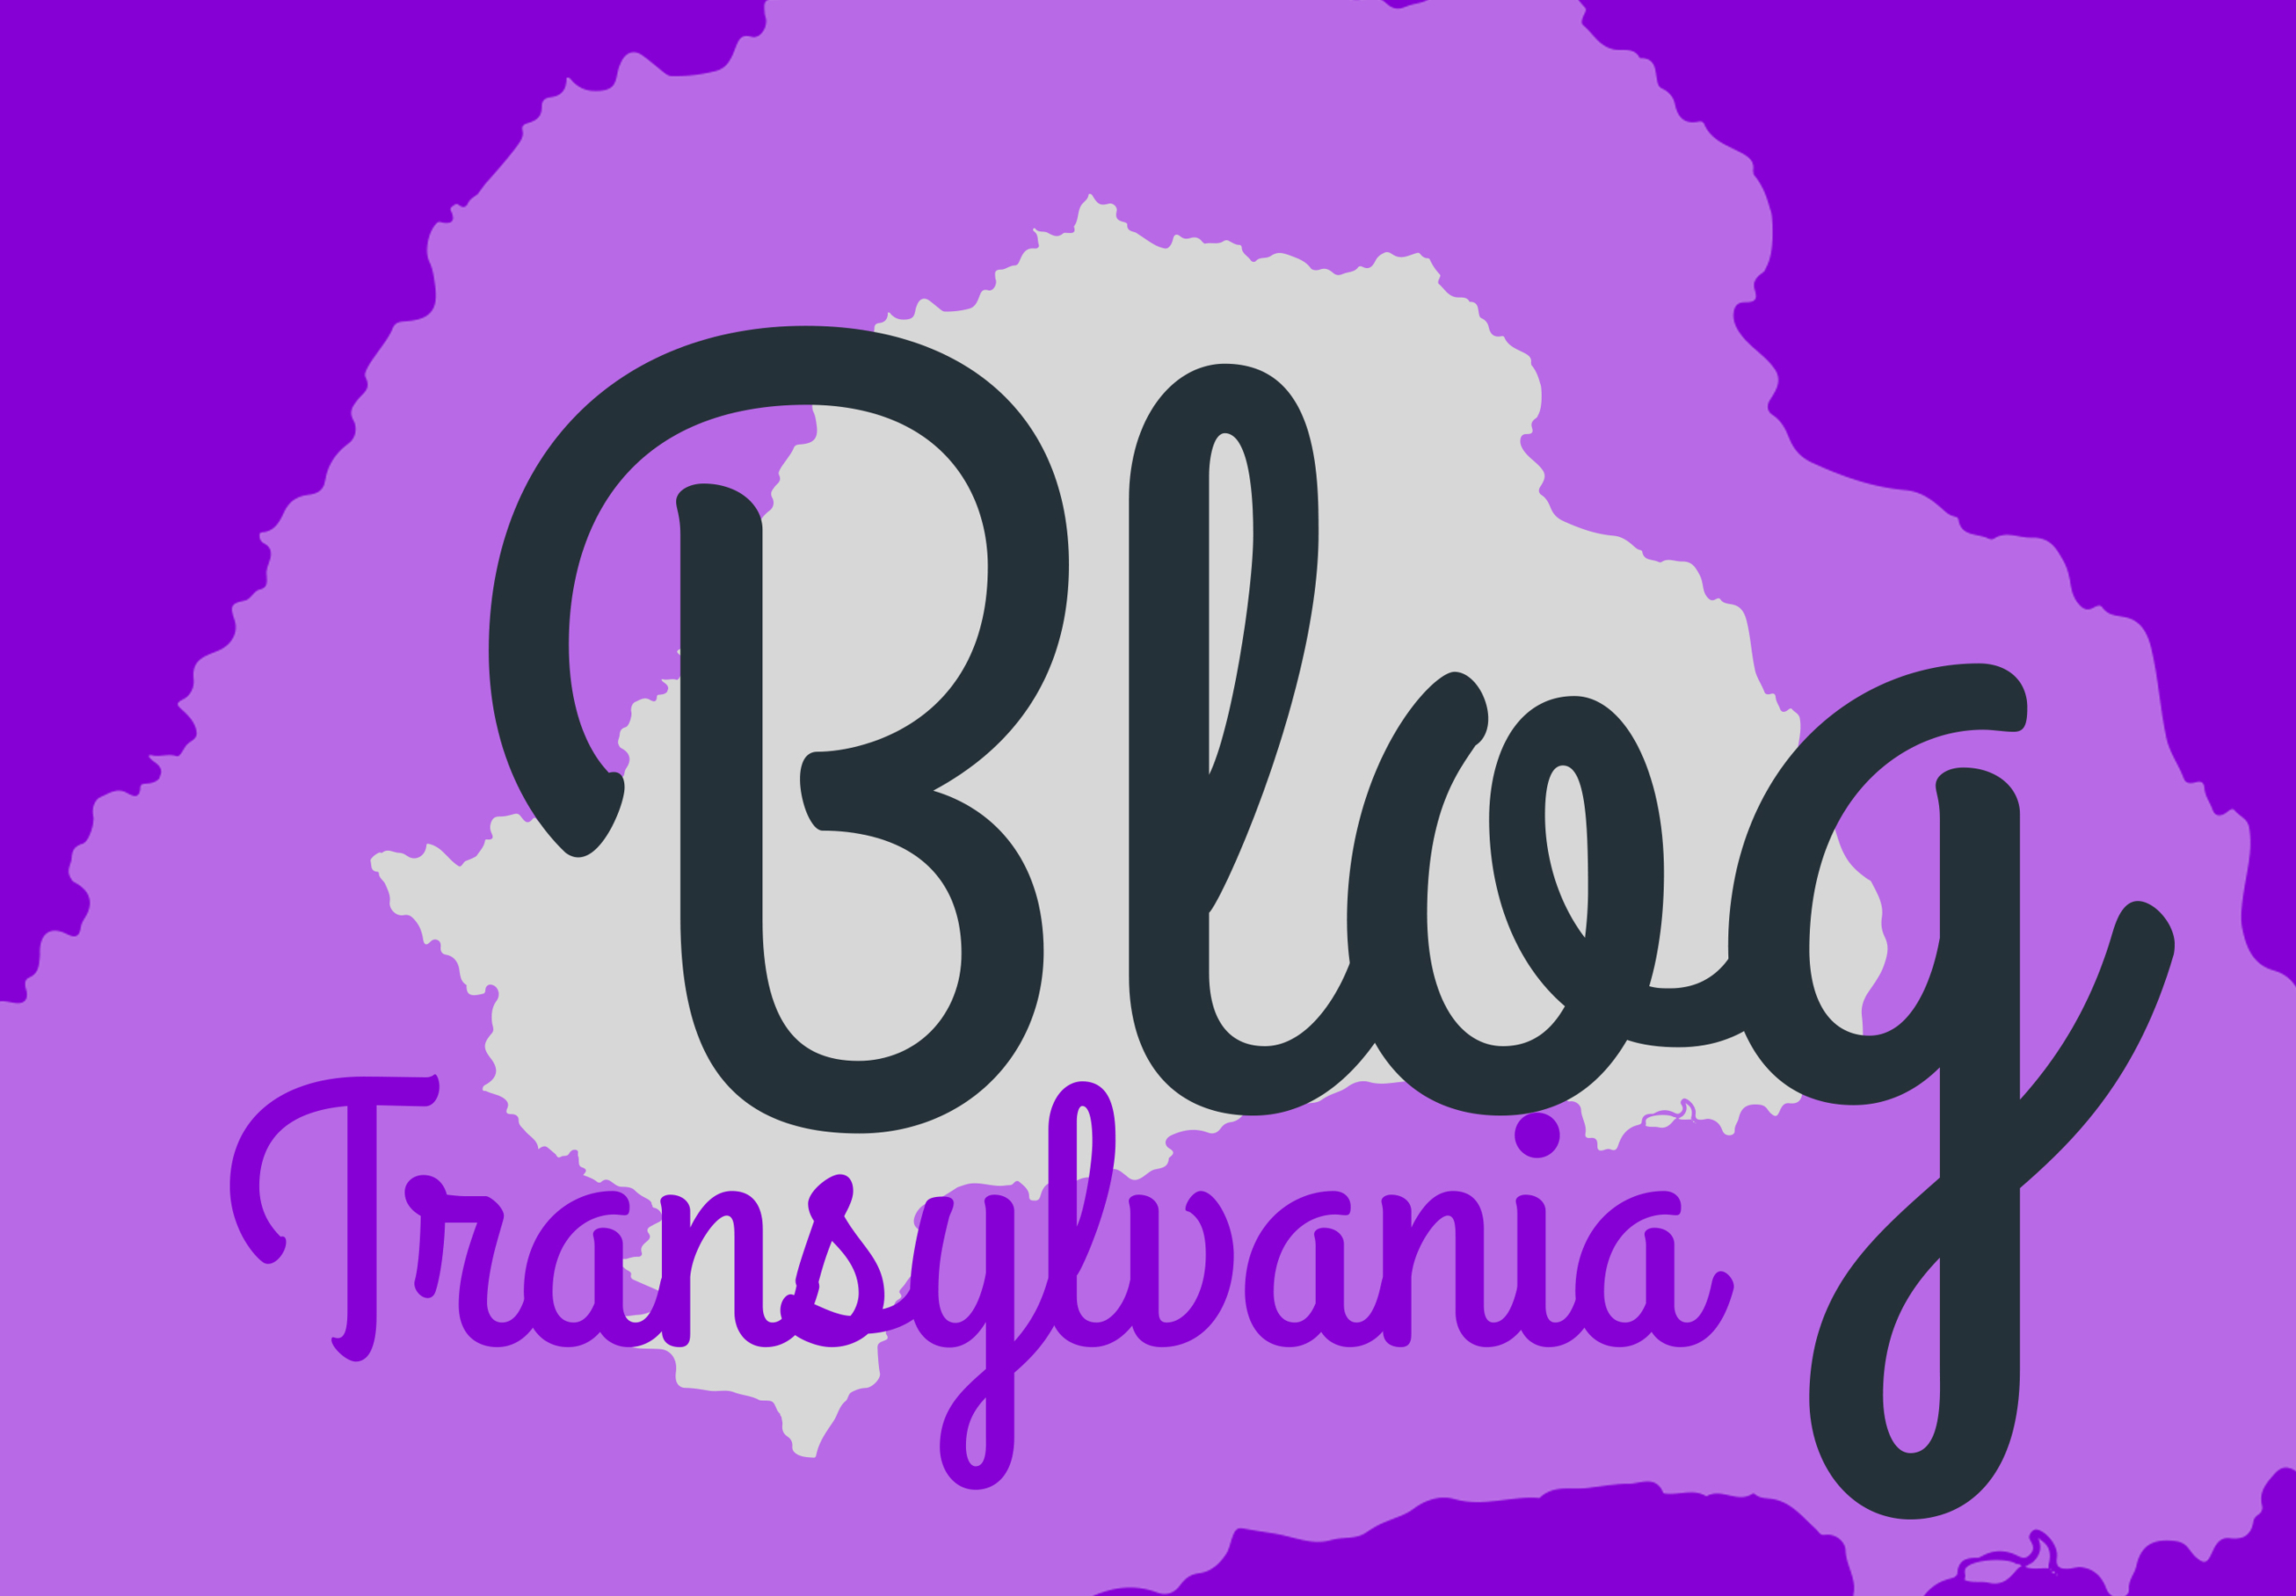 Transylvania.Blog